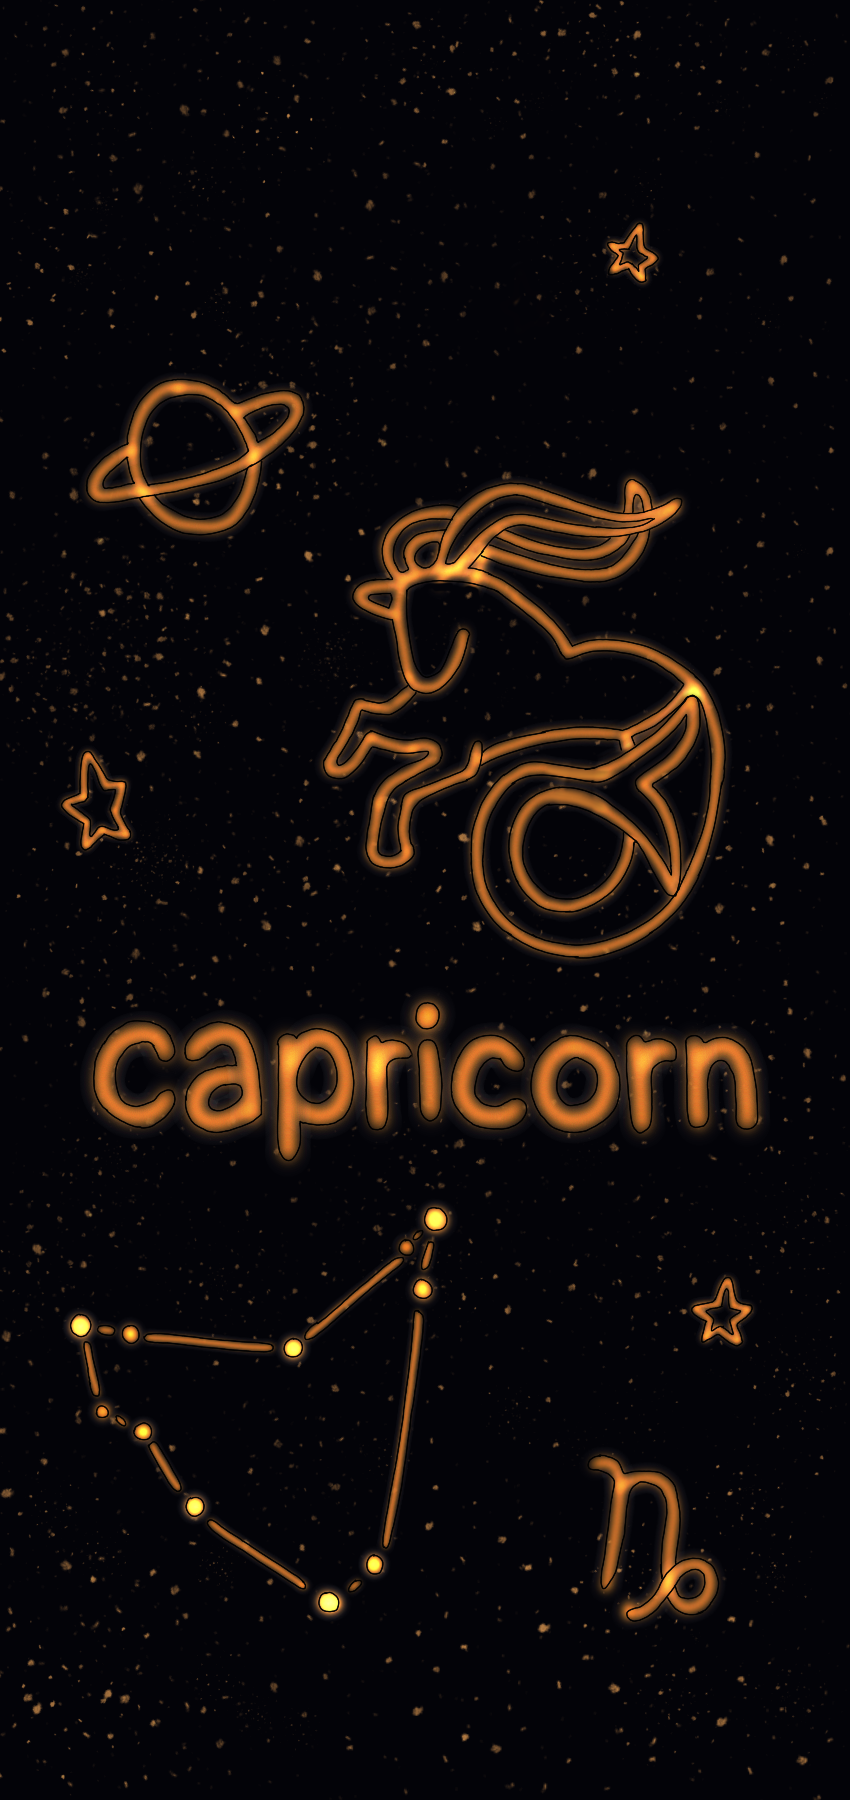 Capricorn Zodiac Sign Wallpaper iPhone. Capricorn aesthetic, Capricorn constellation tattoo, Zodiac capricorn